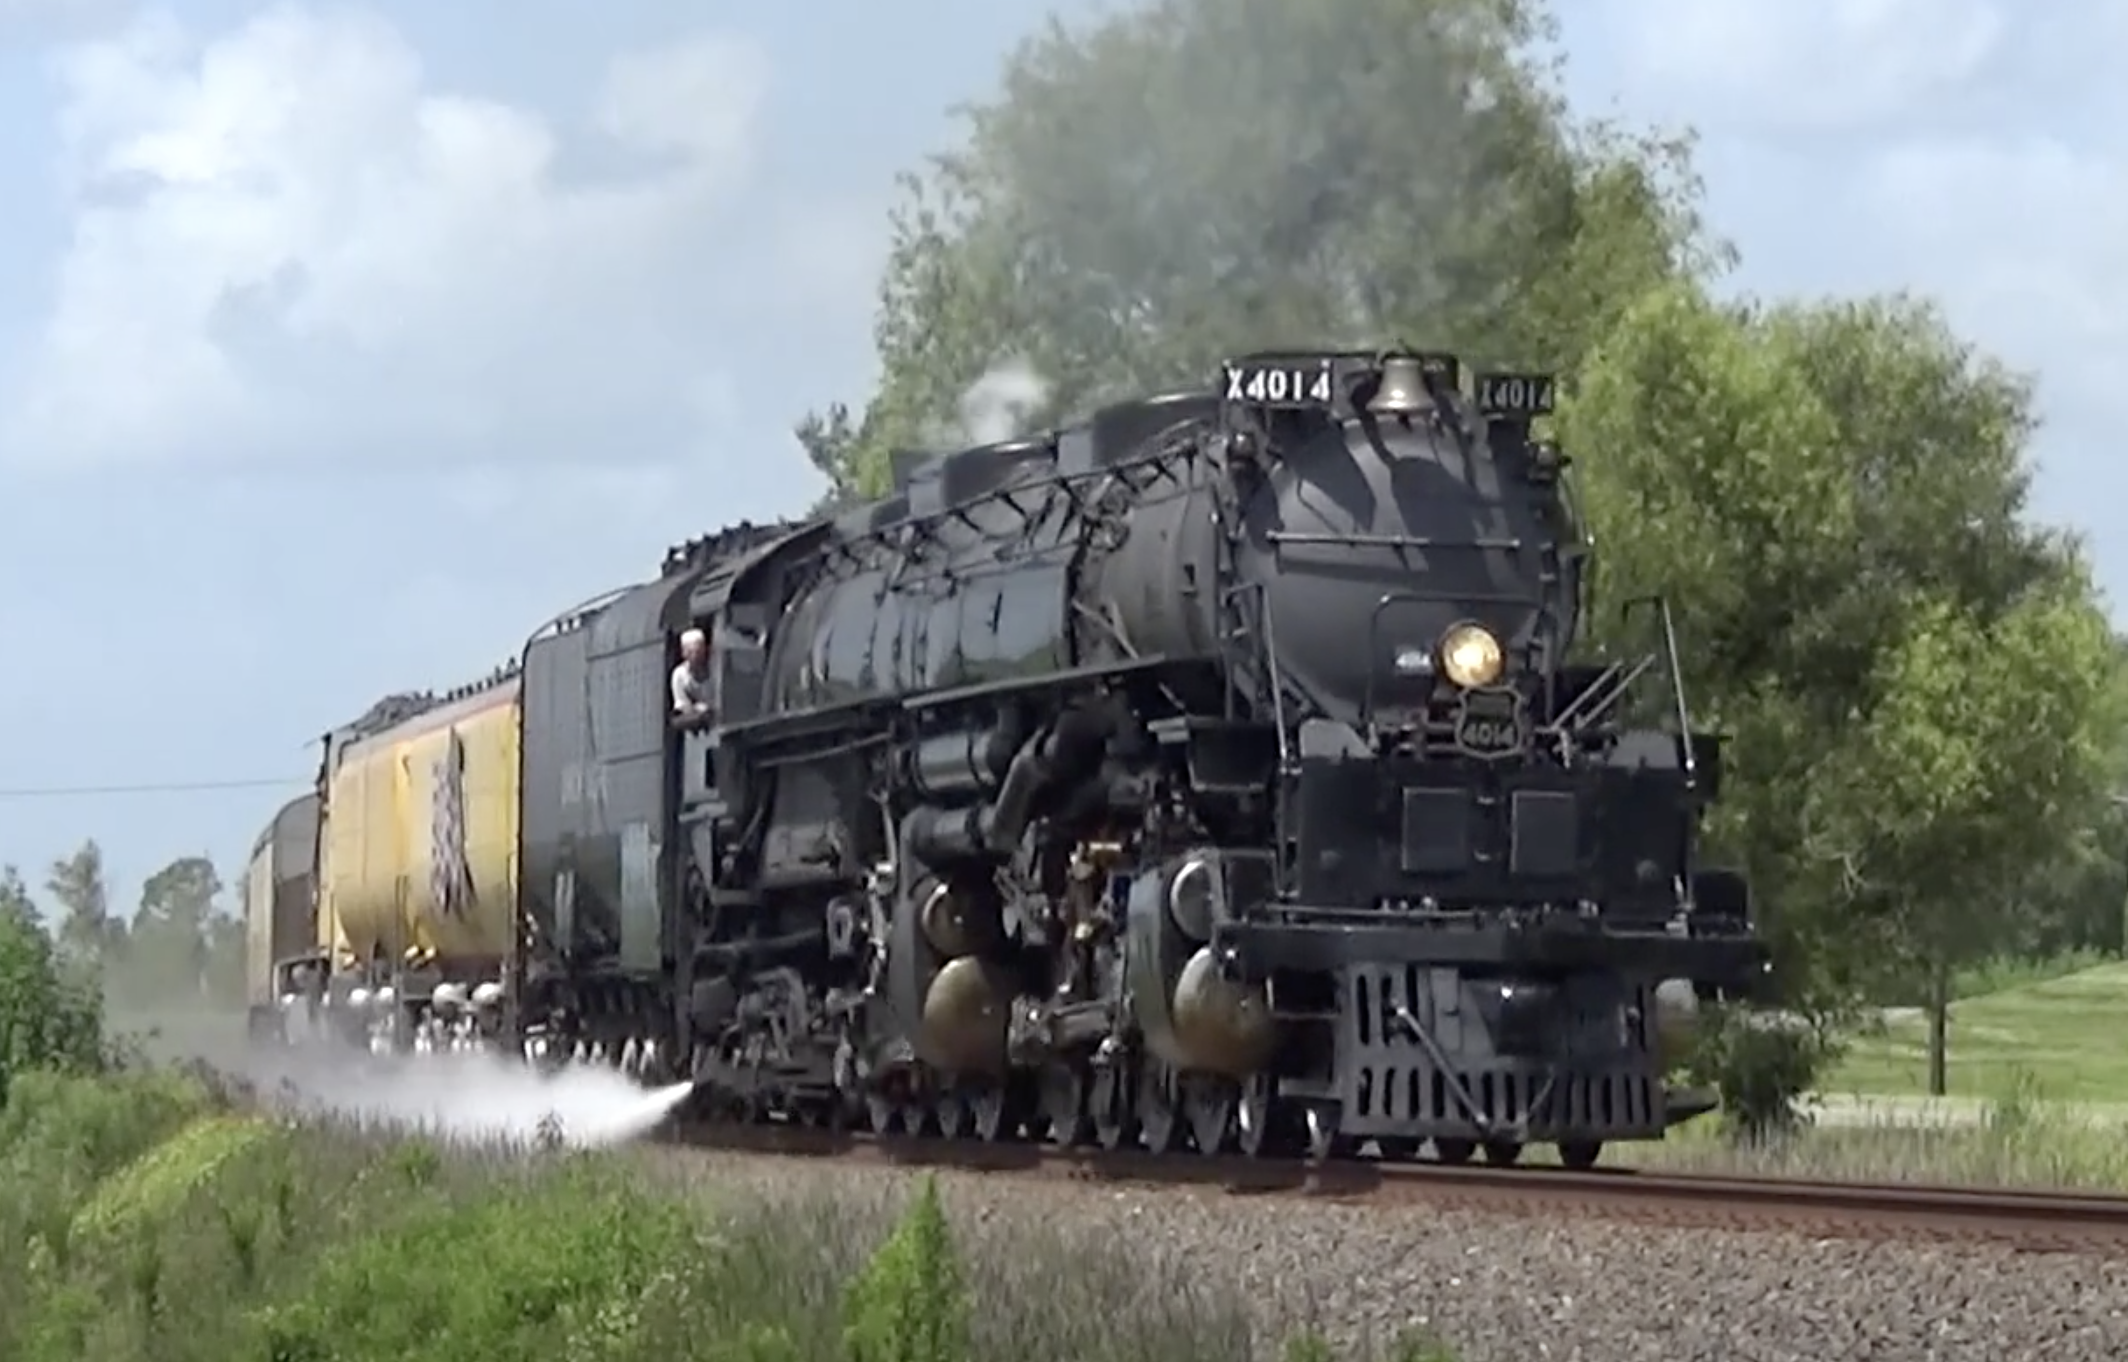 Union Pacific Big Boy 4014’s trip through Louisiana in 2021